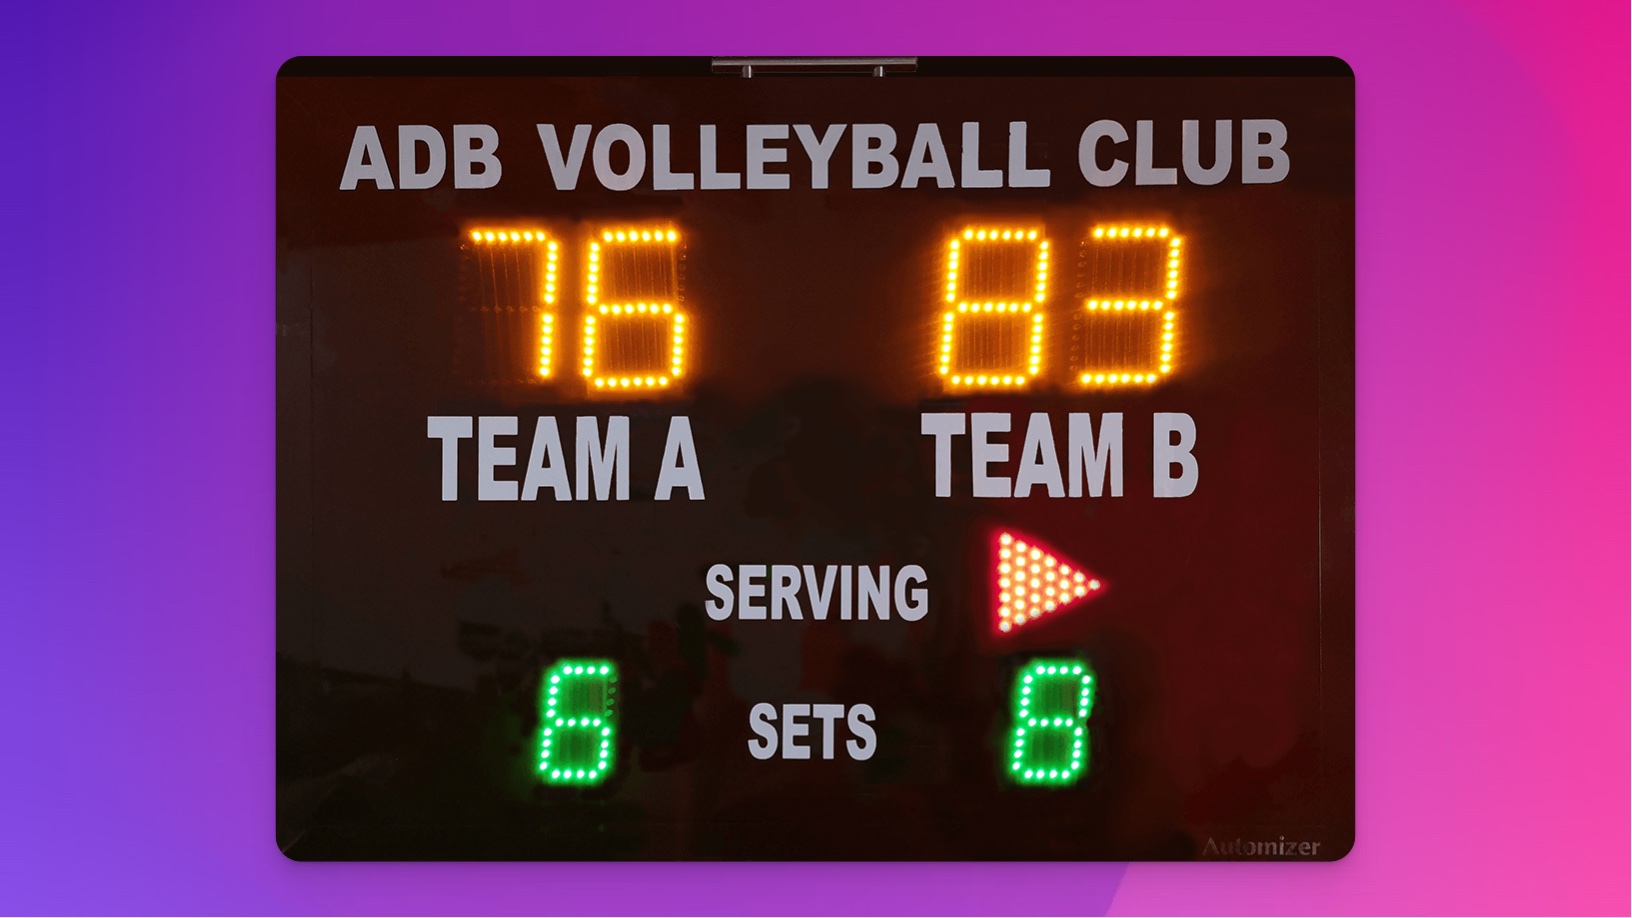 An electronic volleyball scoreboard